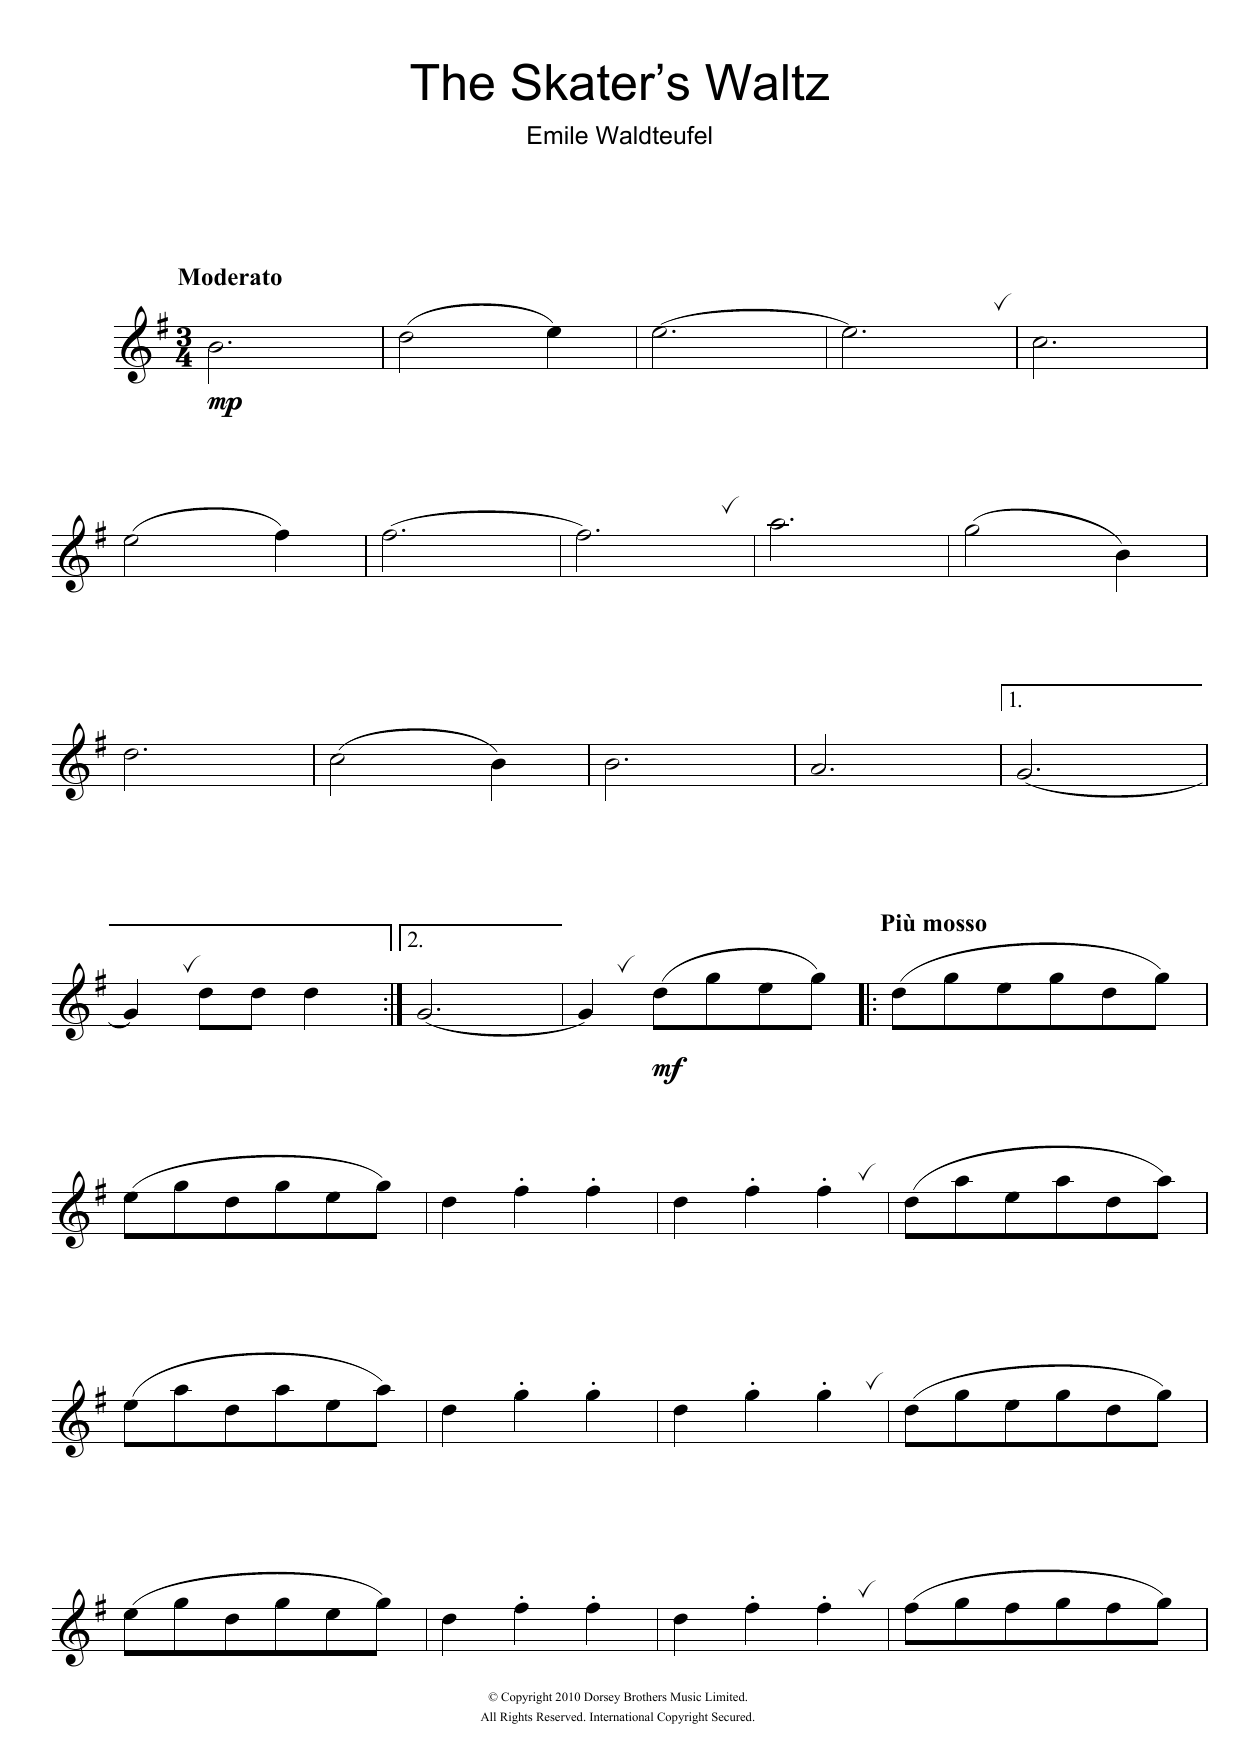 Emile Waldteufel The Skater's Waltz Sheet Music Notes & Chords for Flute - Download or Print PDF